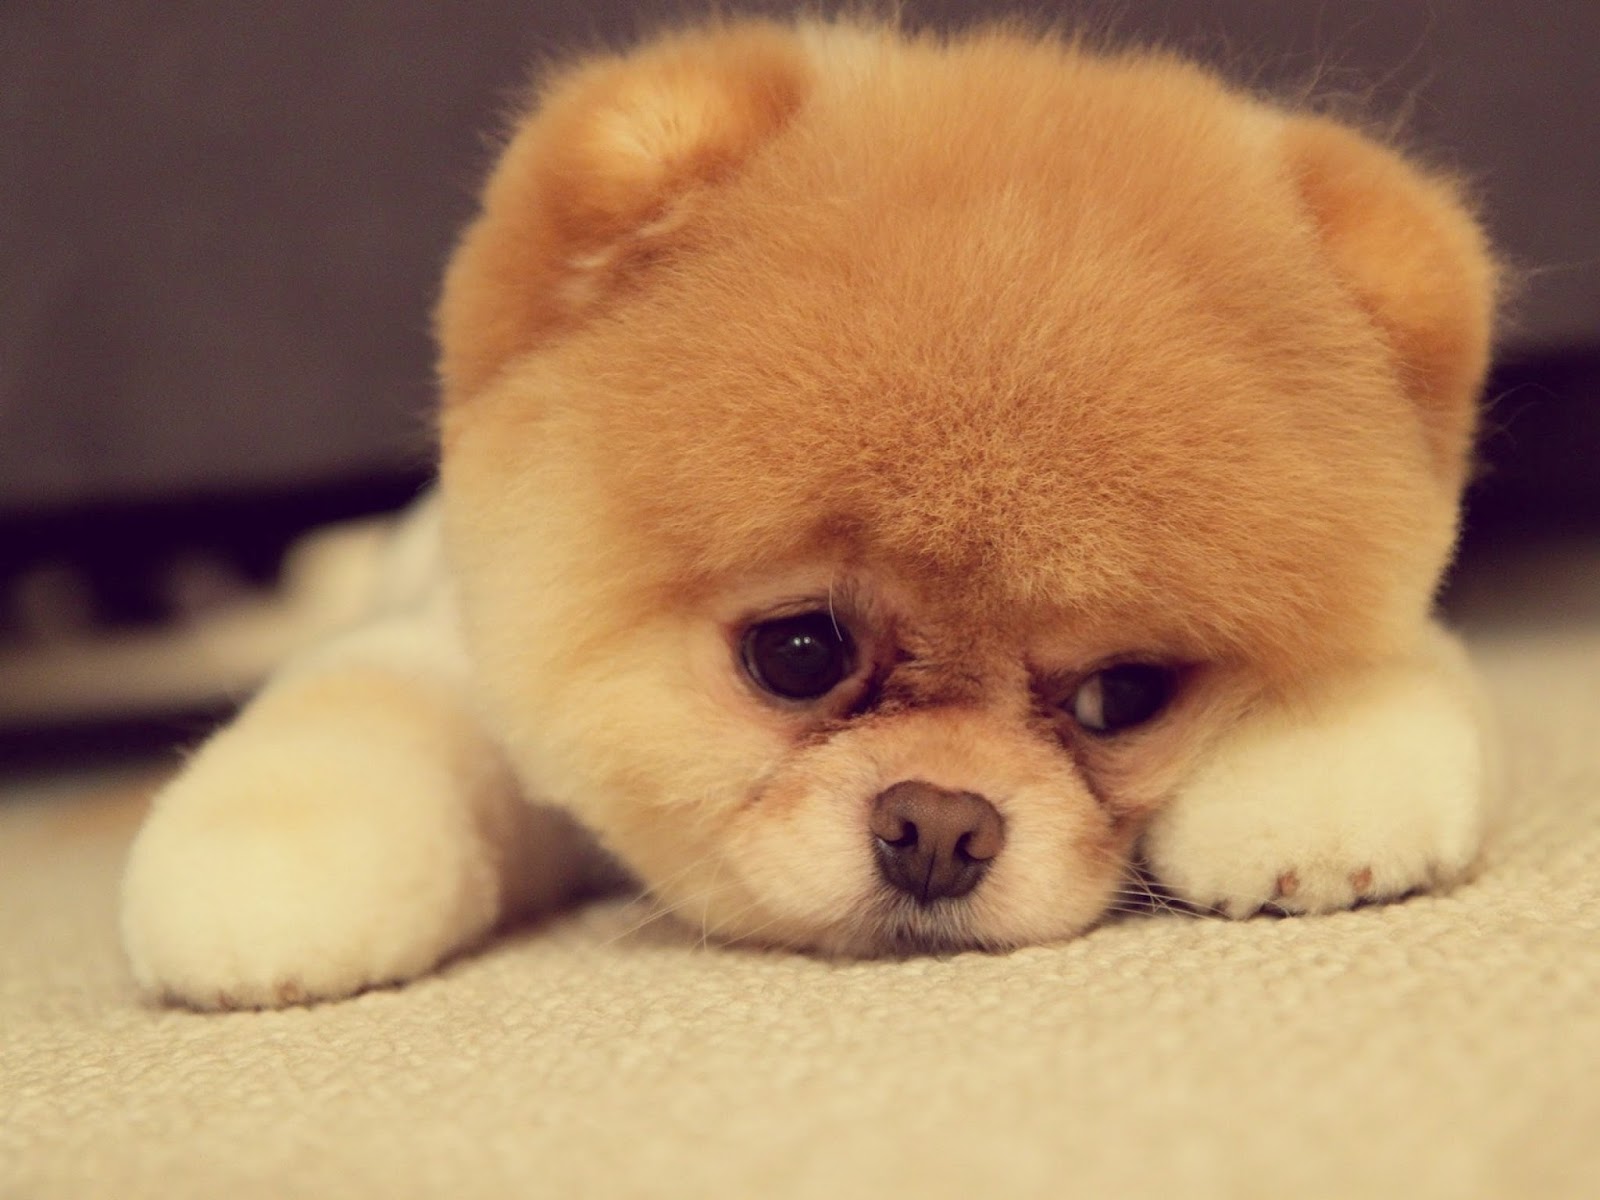 Sad-Puppy-Face.jpg